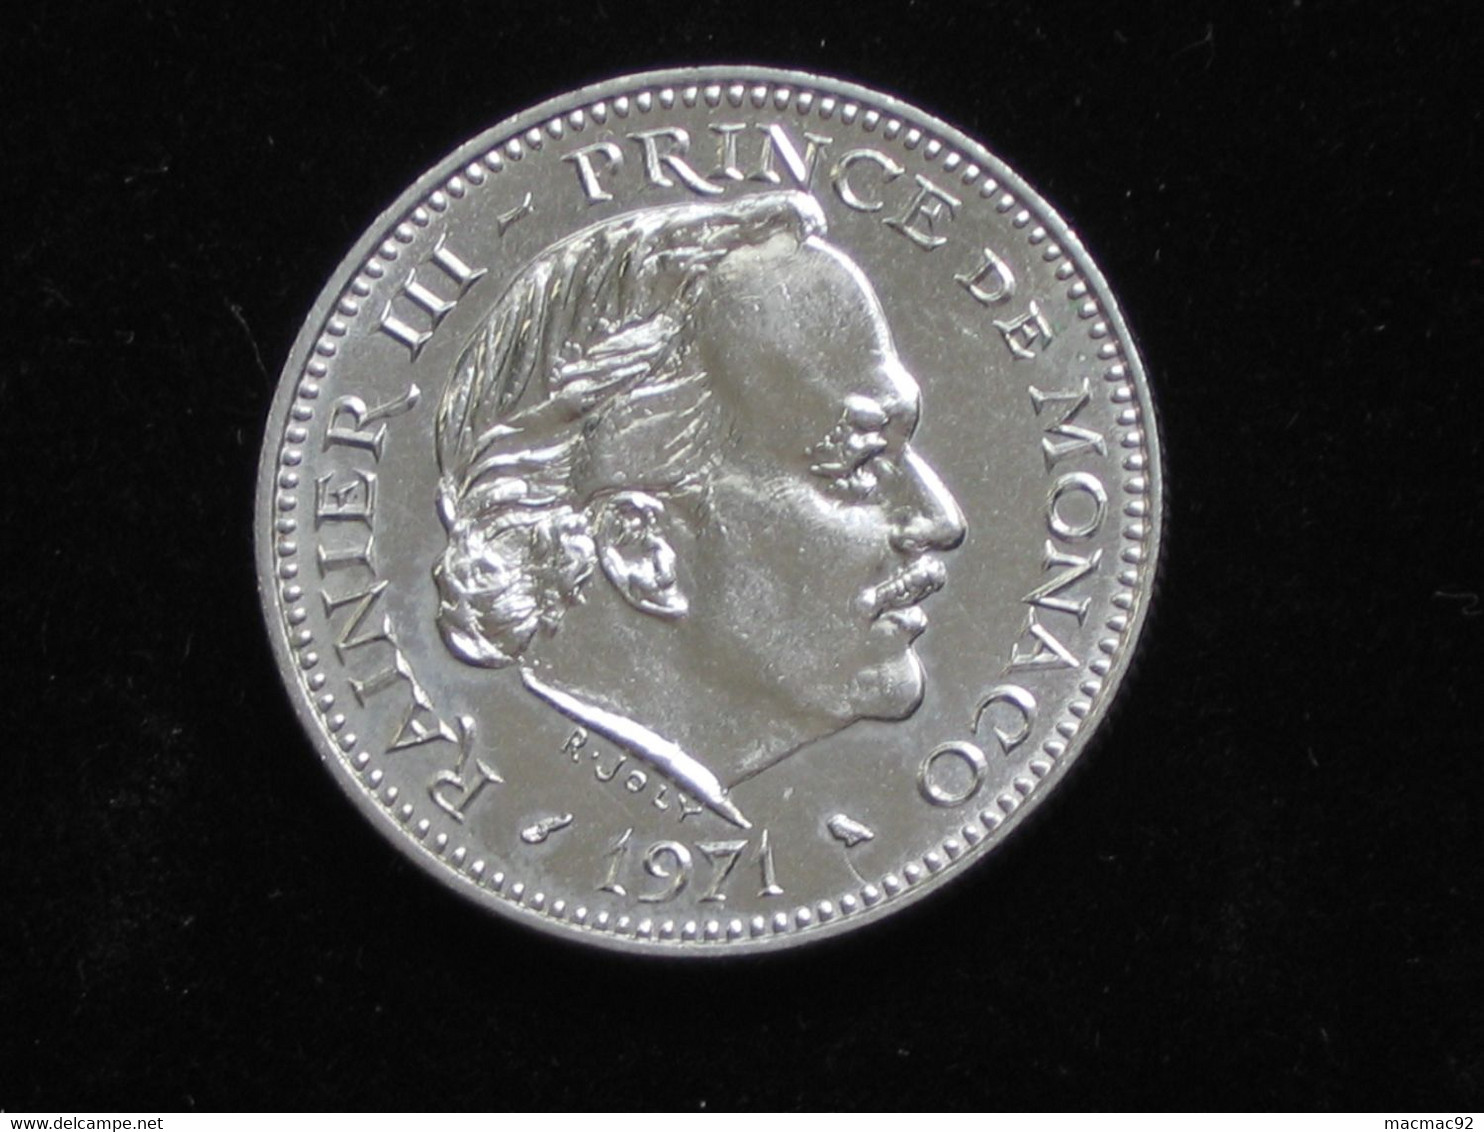 MONACO - 5 Frs 1971 - Rainier III Prince De Monaco **** EN ACHAT IMMEDIAT **** - 1949-1956 Alte Francs